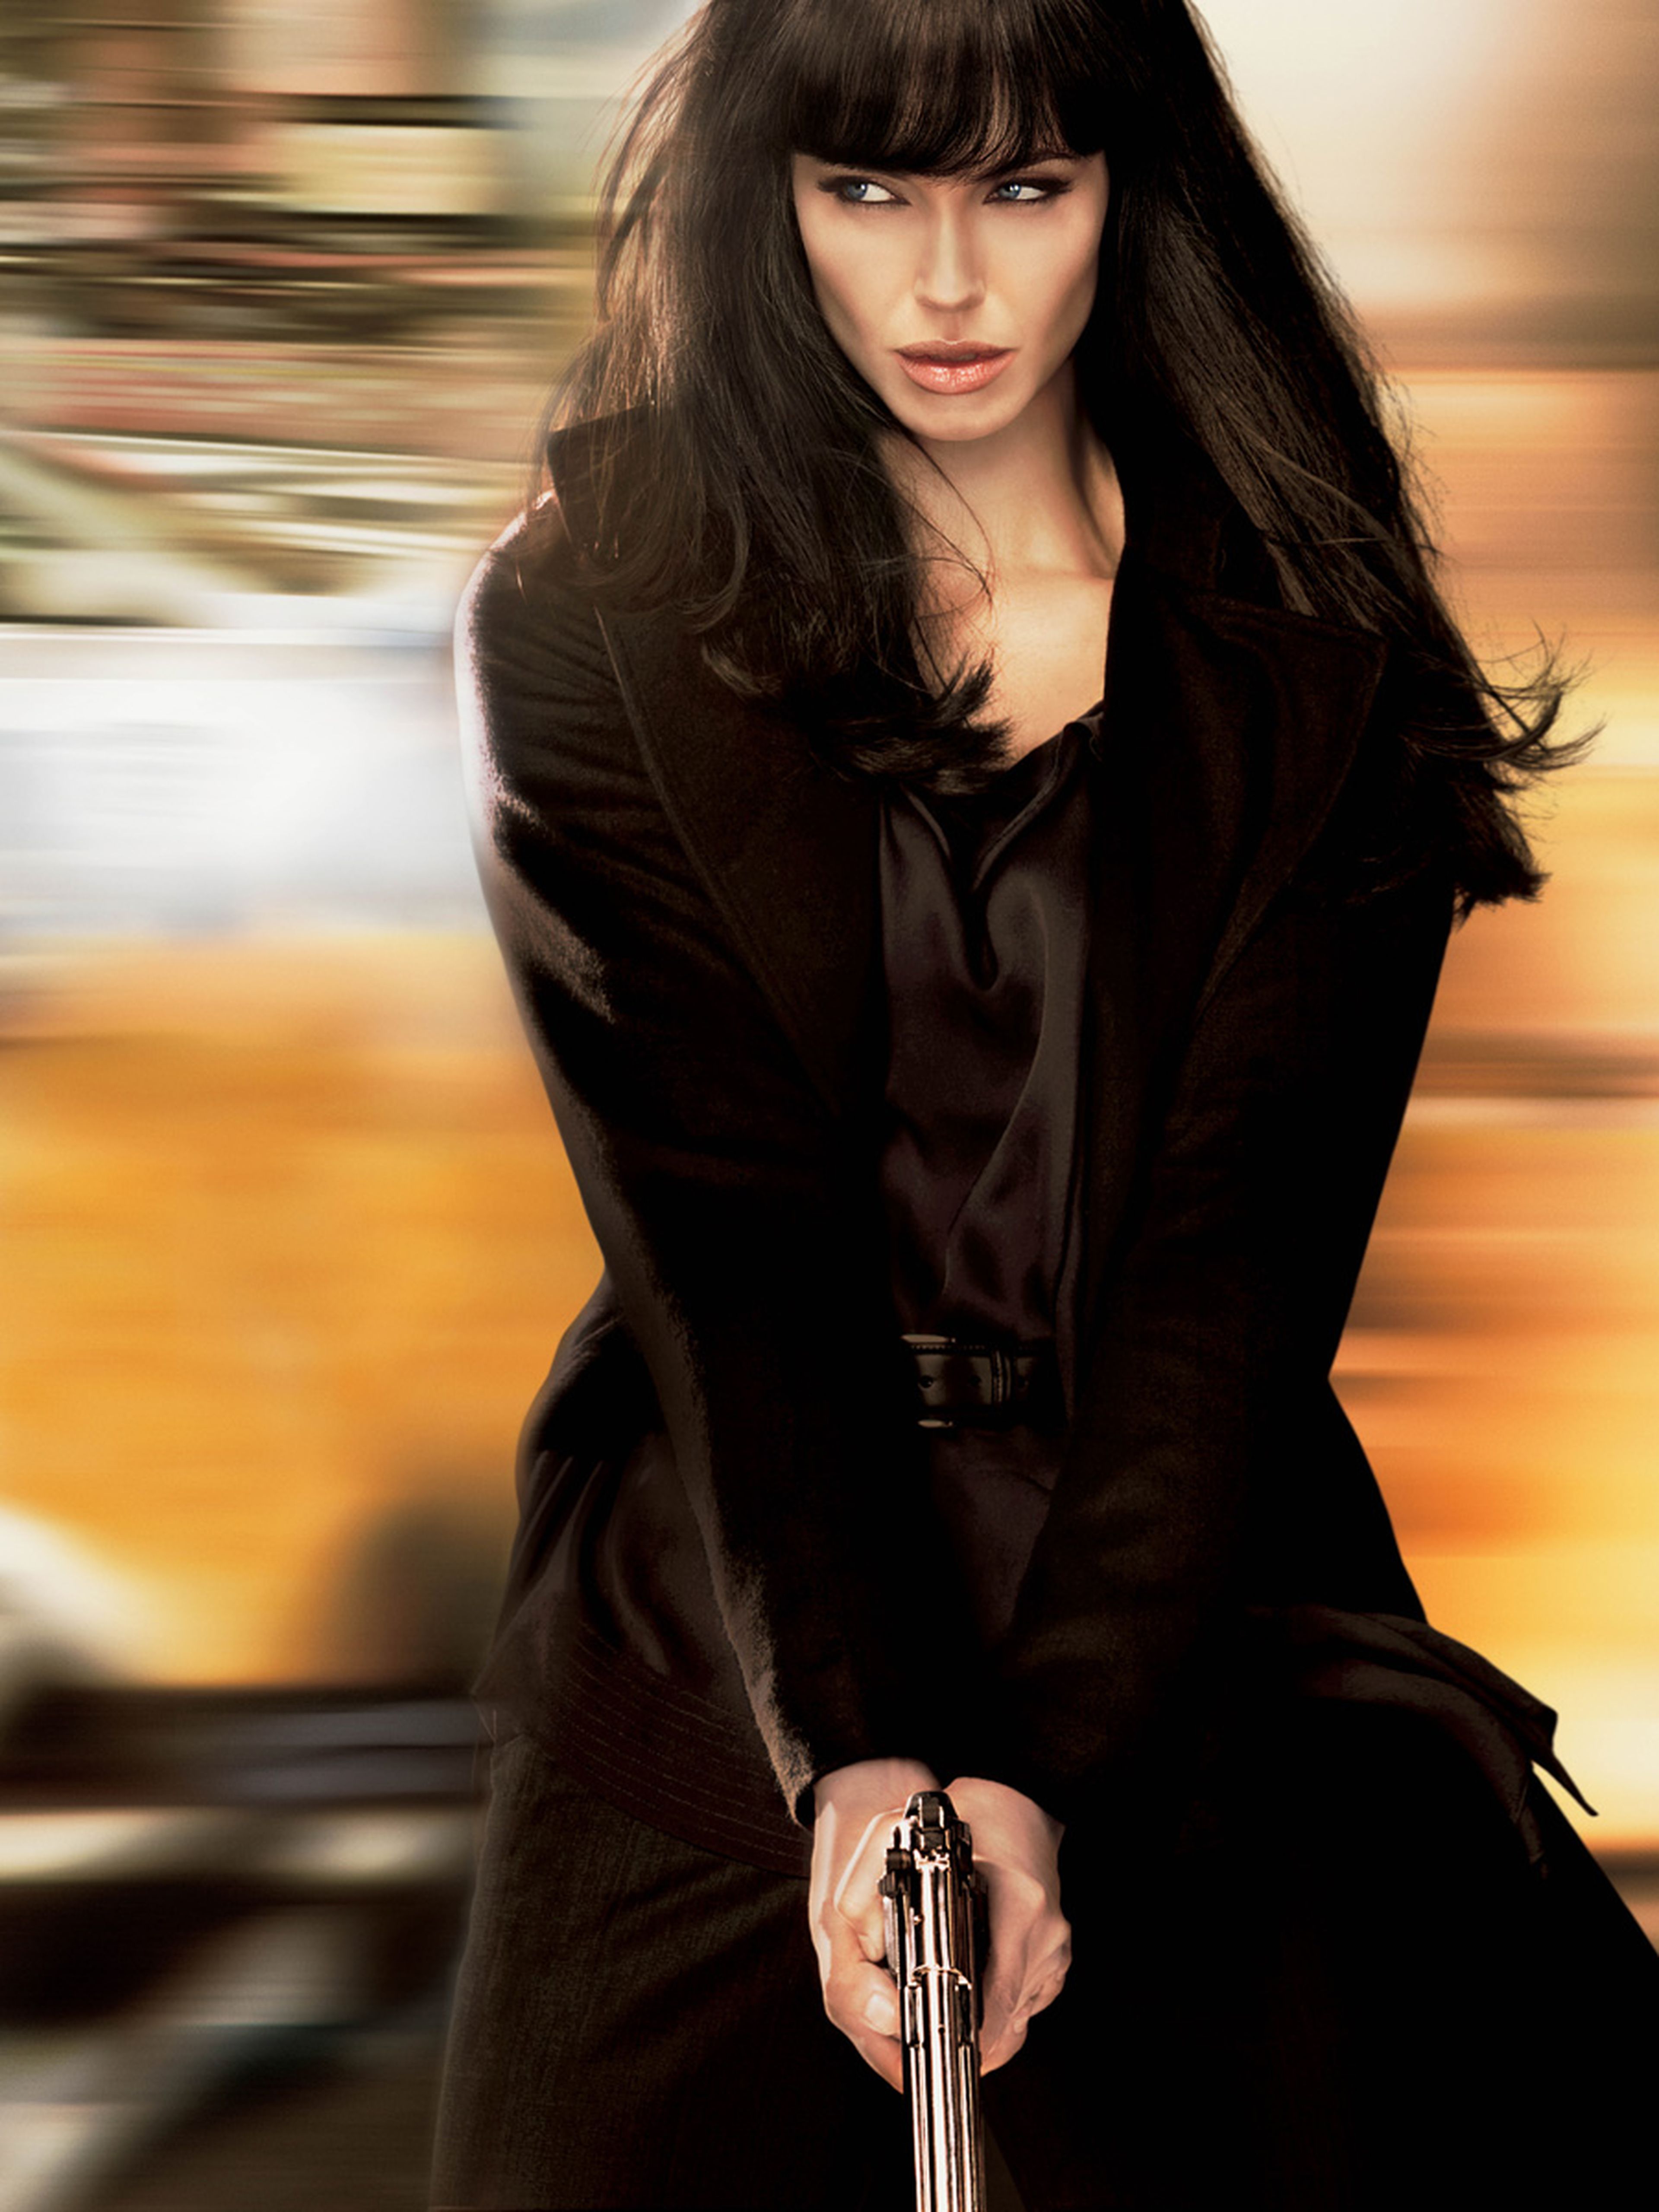 Salt tendrá serie televisiva... ¿Aparecerá Angelina Jolie?